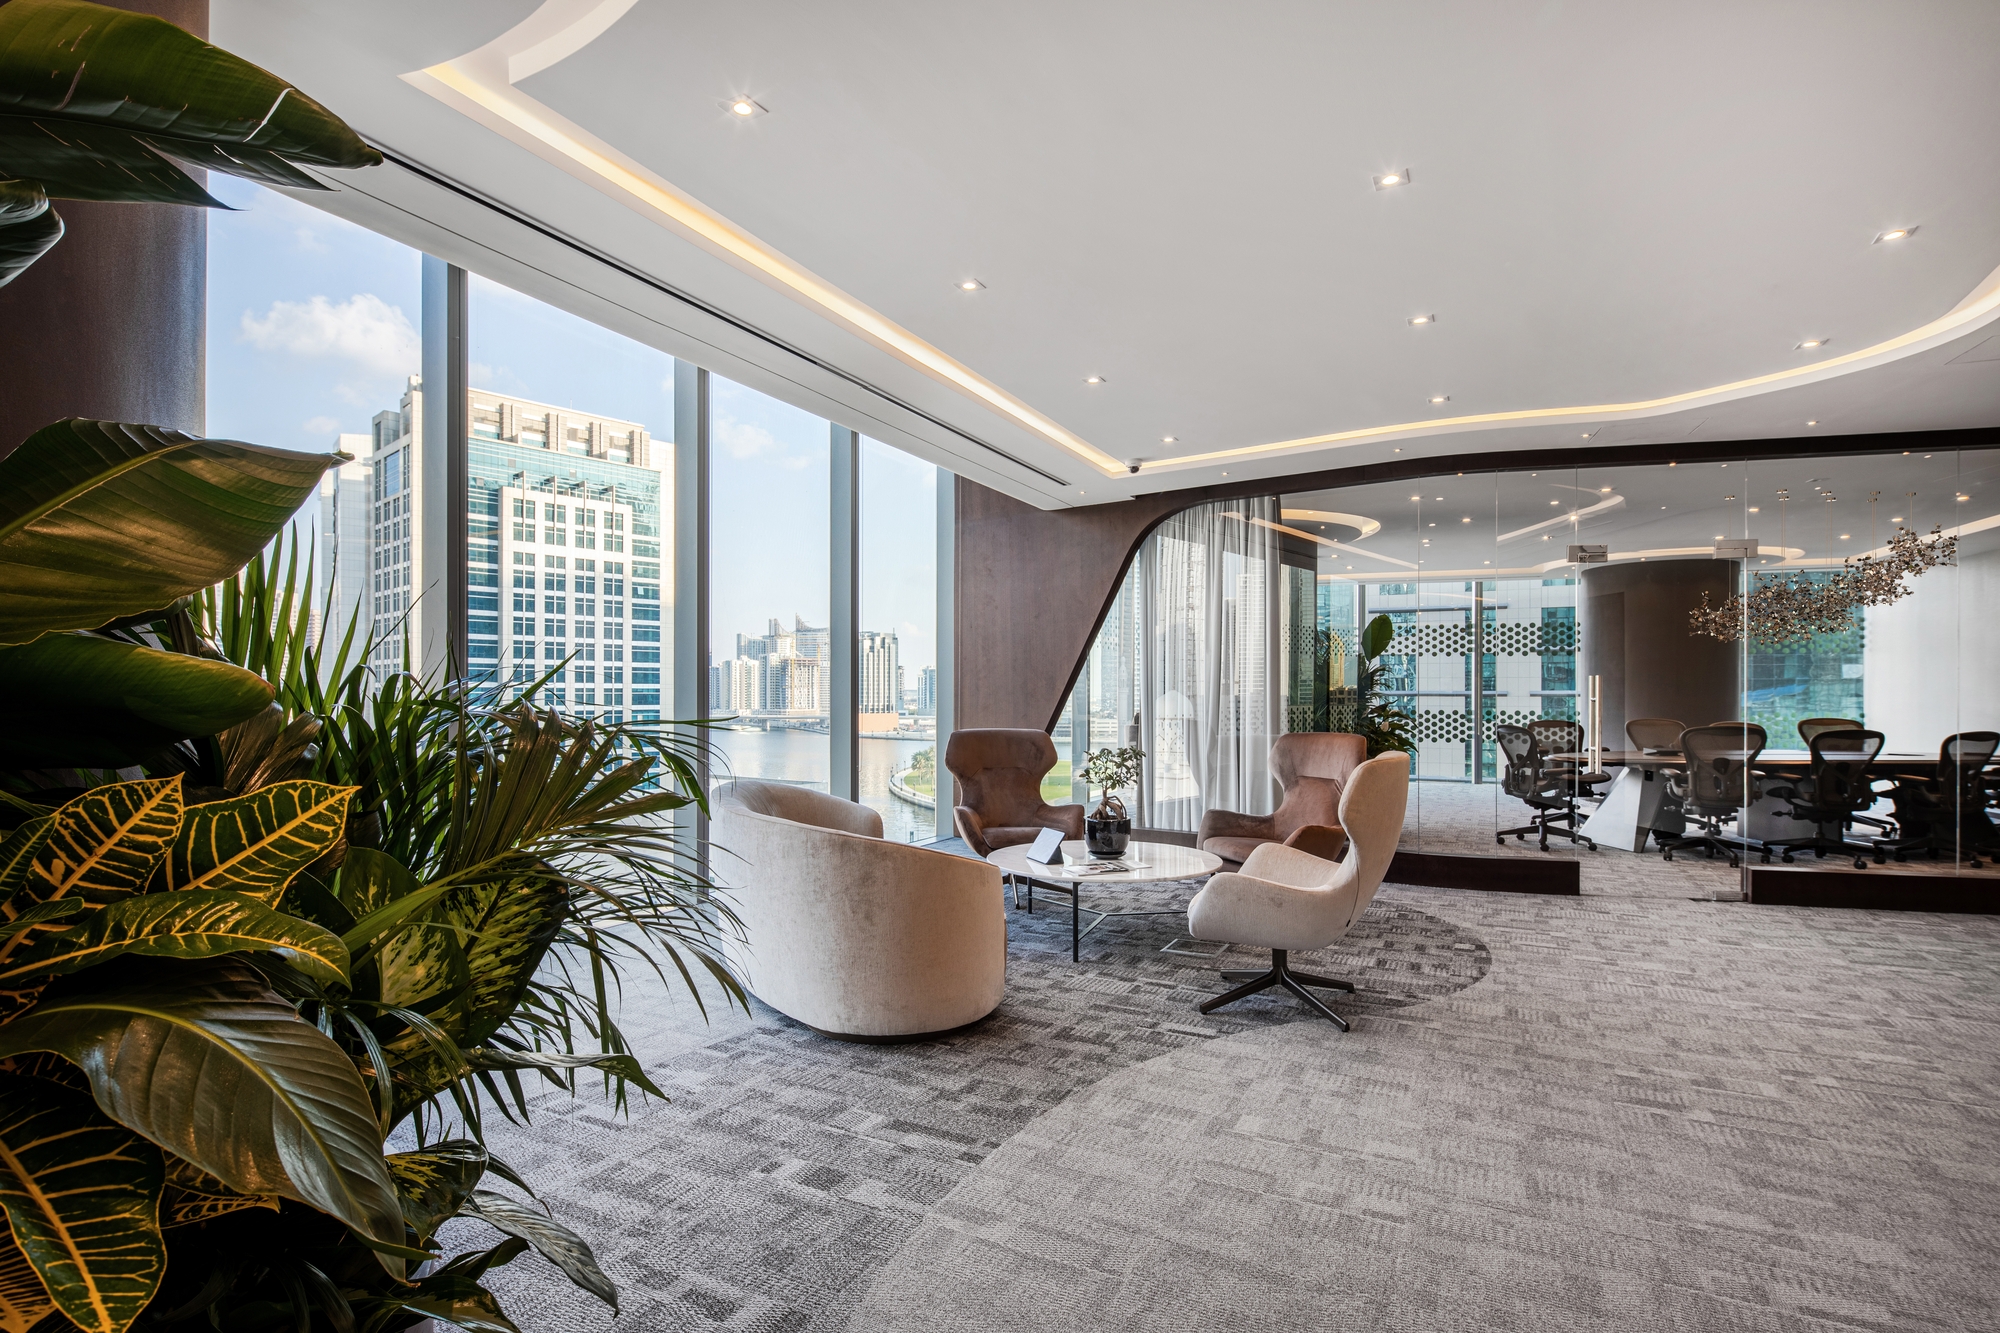 Confidential IT Company Offices - Dubai | Office Snapshots